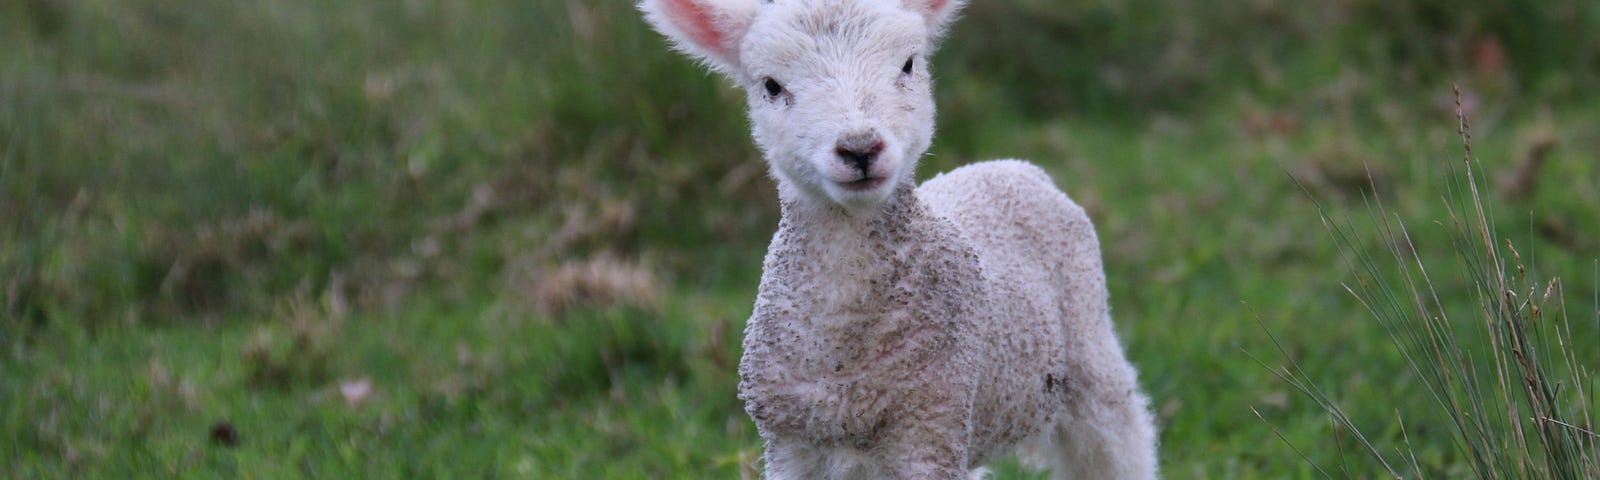 Little lamb and language